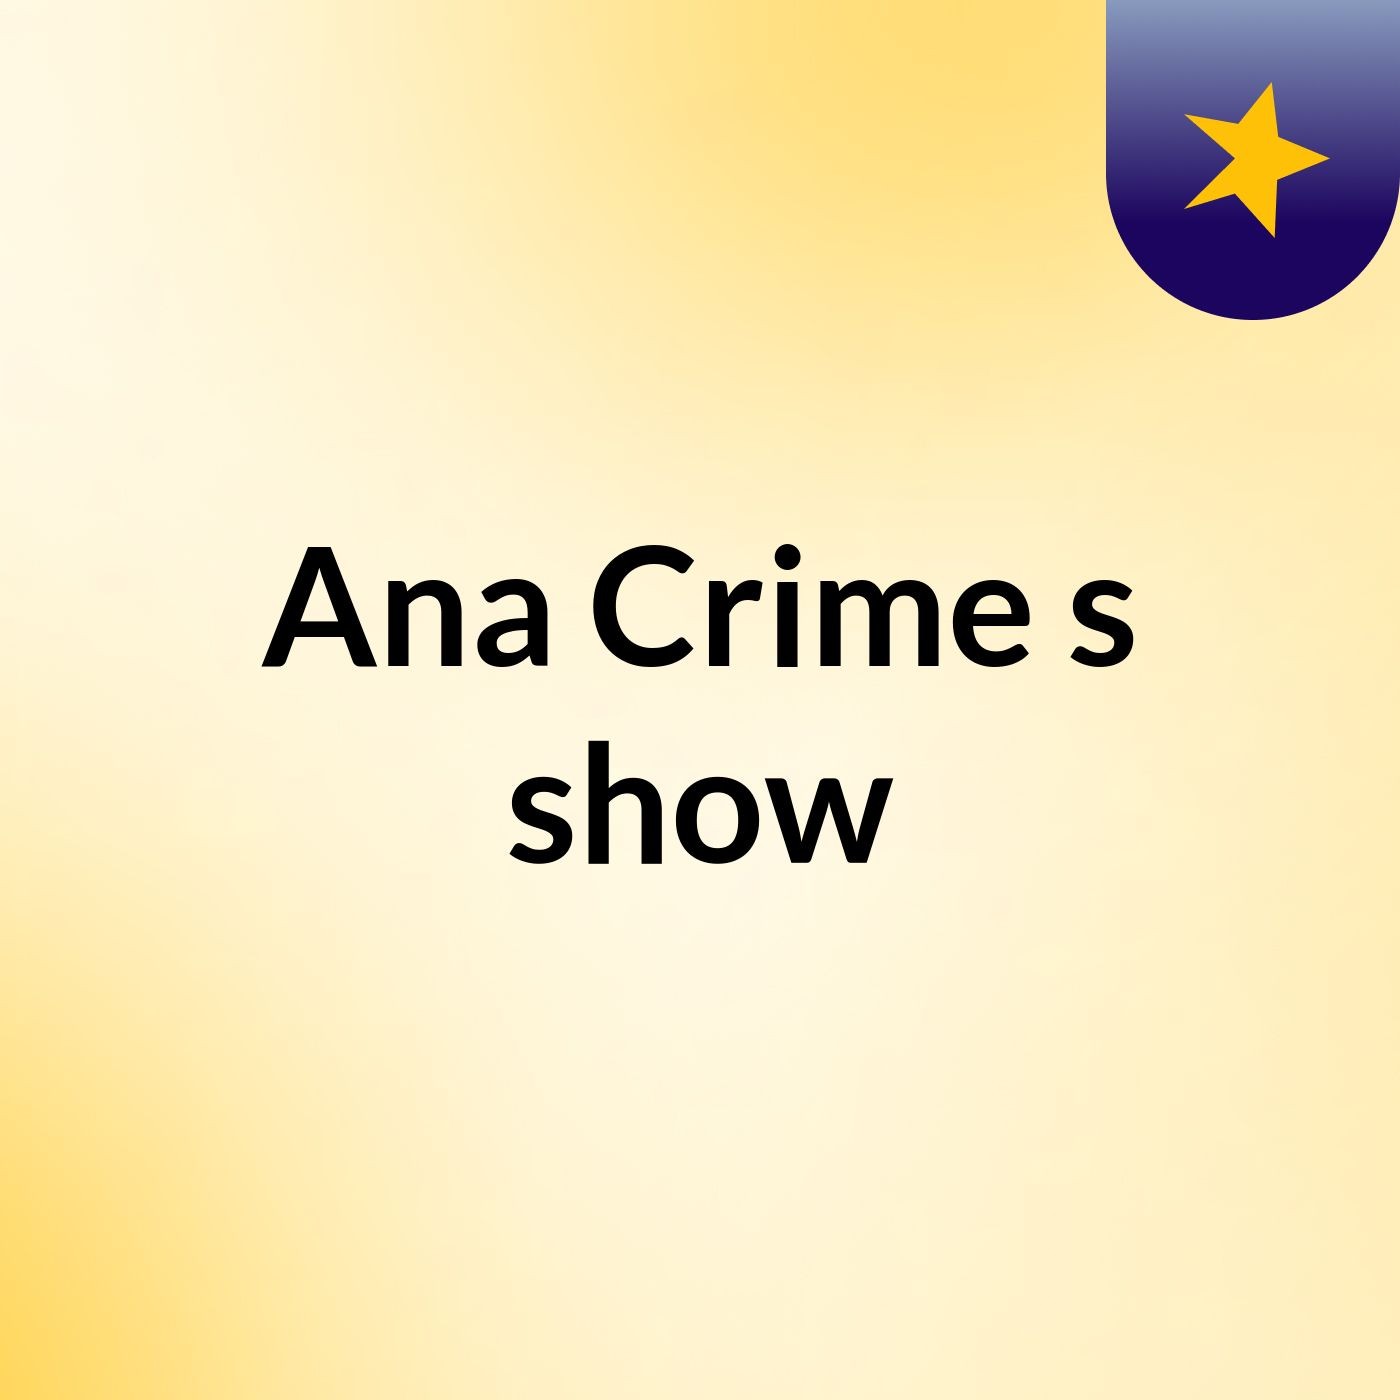 Ana Crime's show